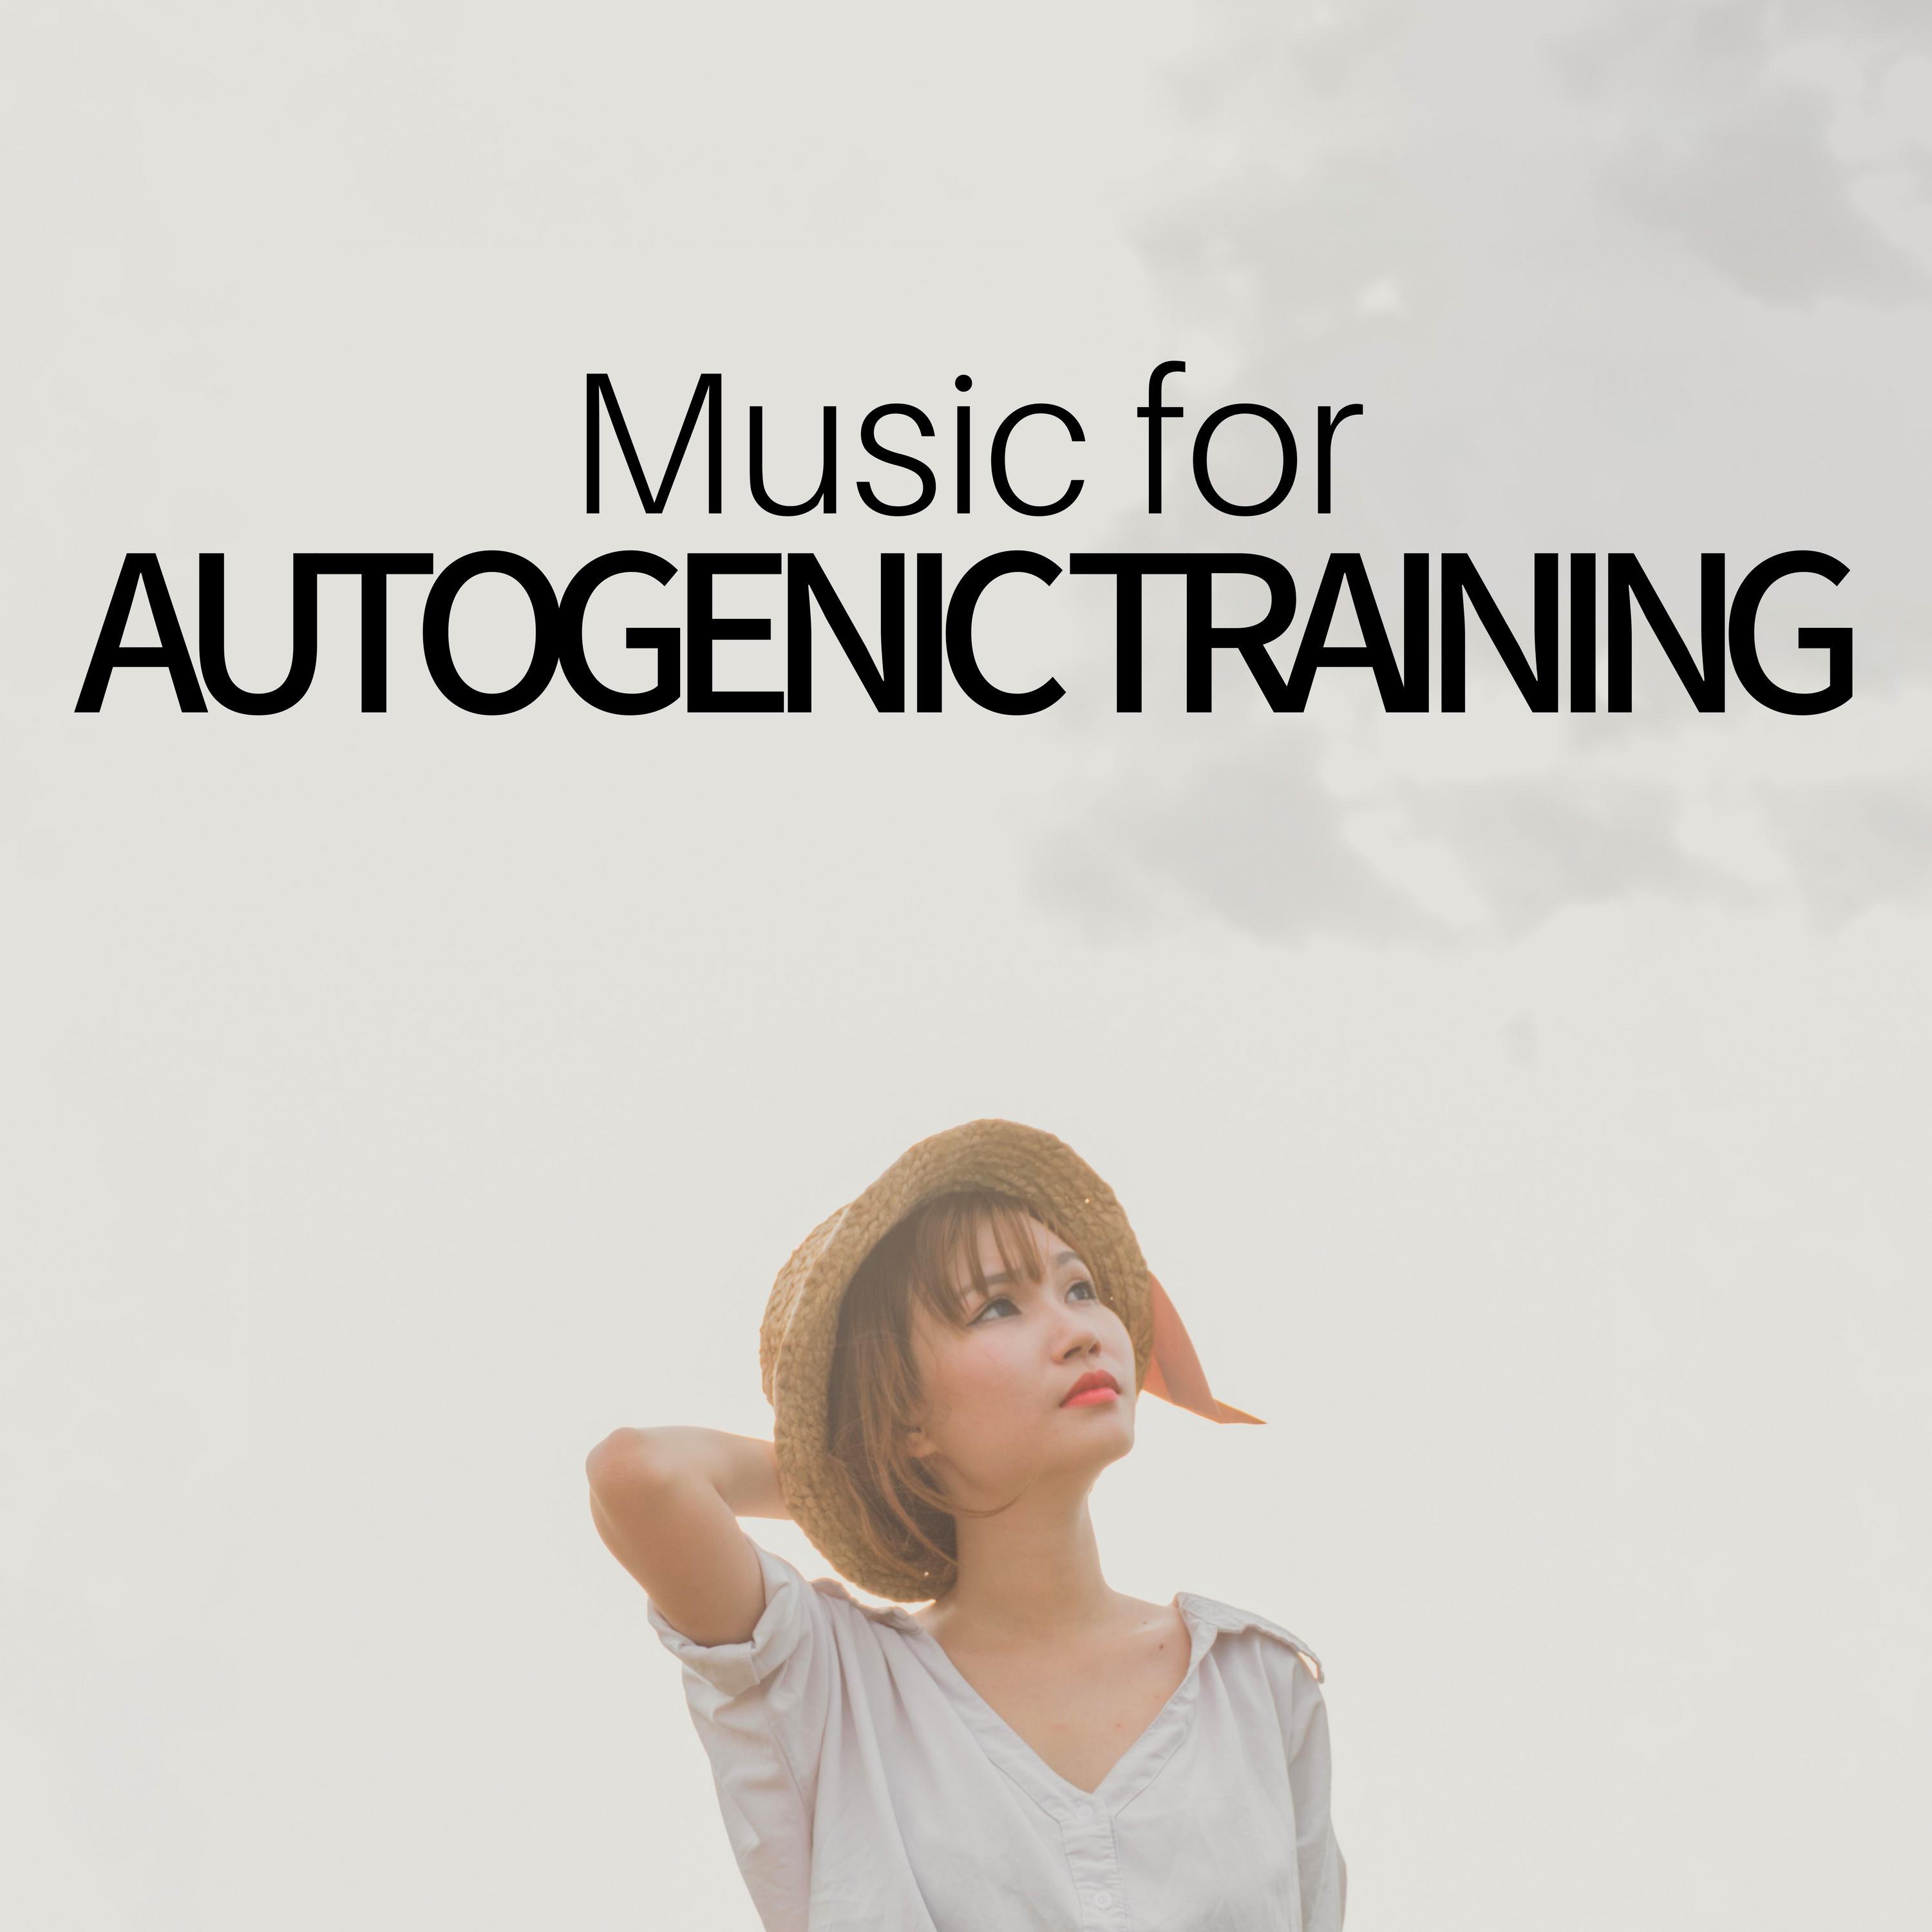 Music for Autogenic Training